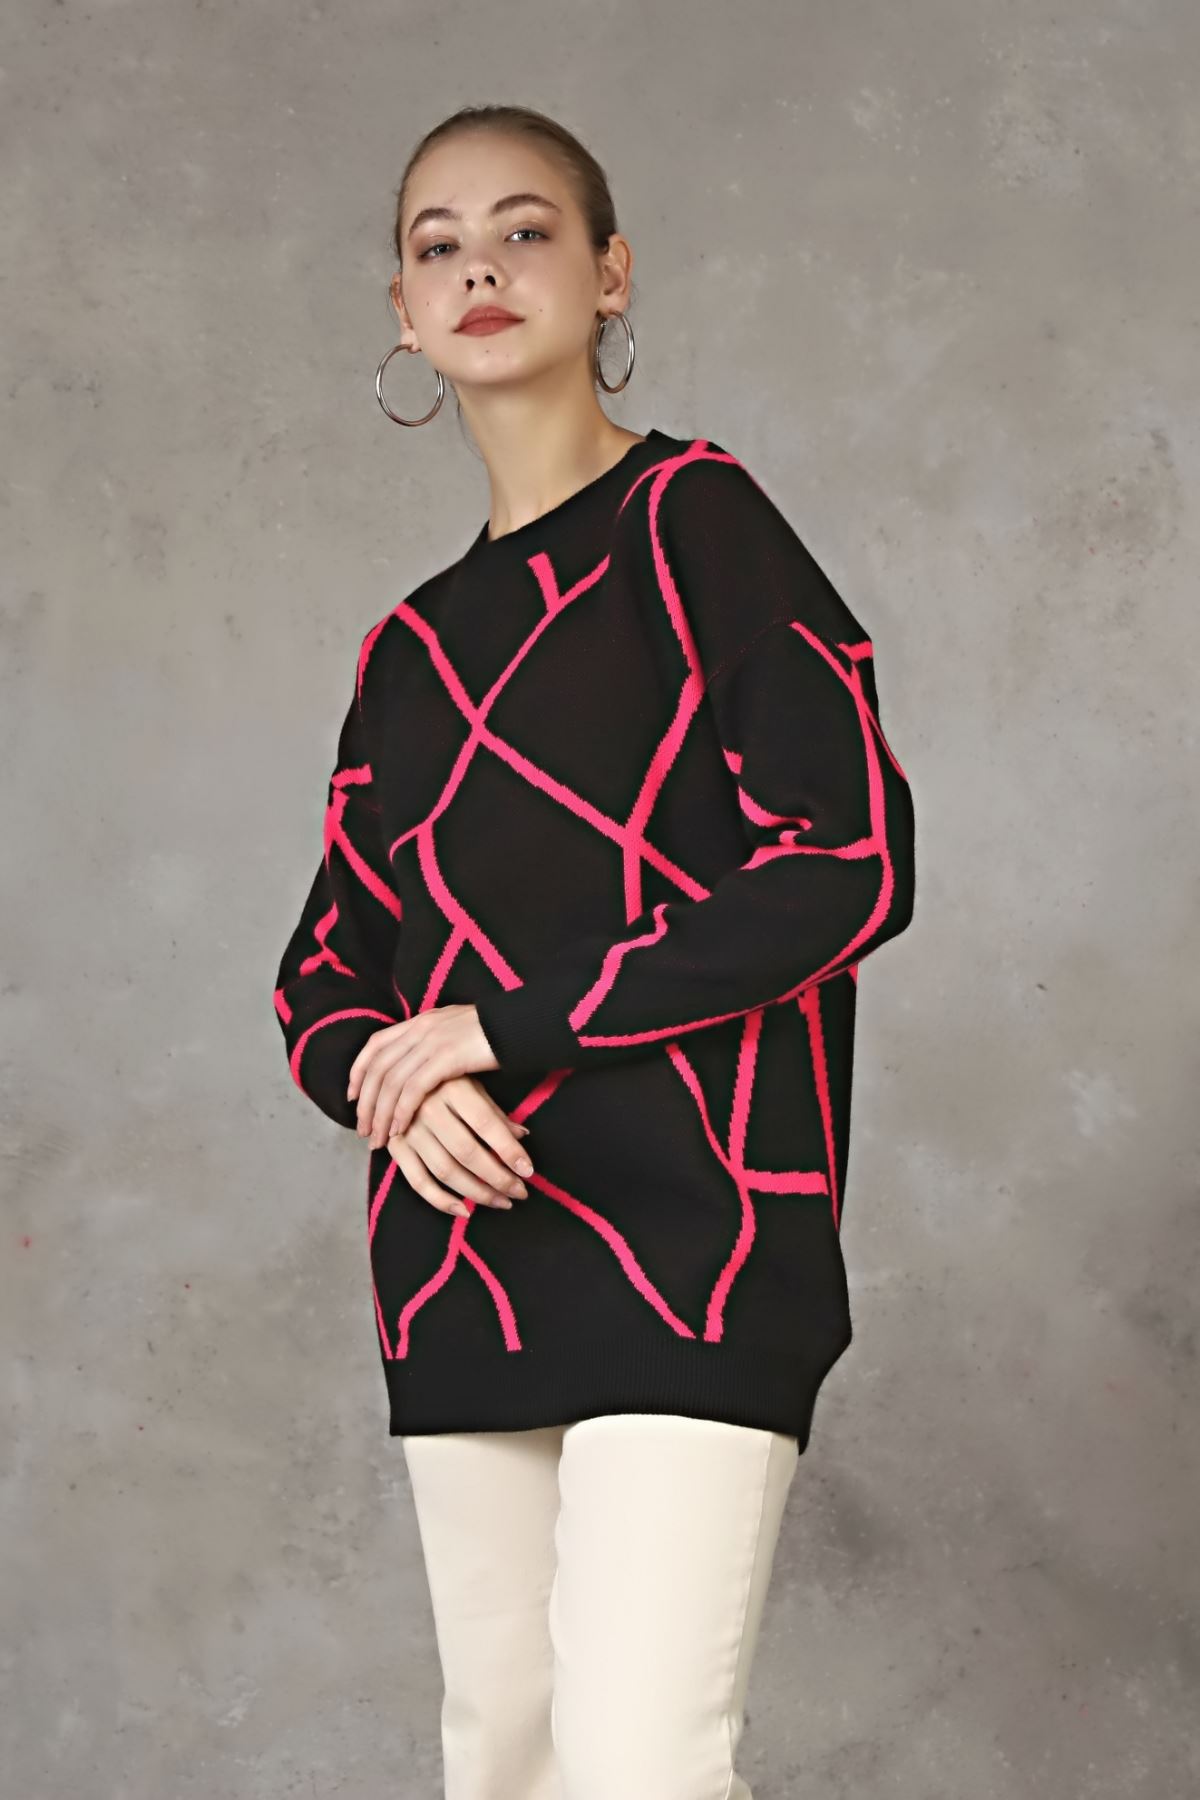 Patterned Women's Sweater Tunic